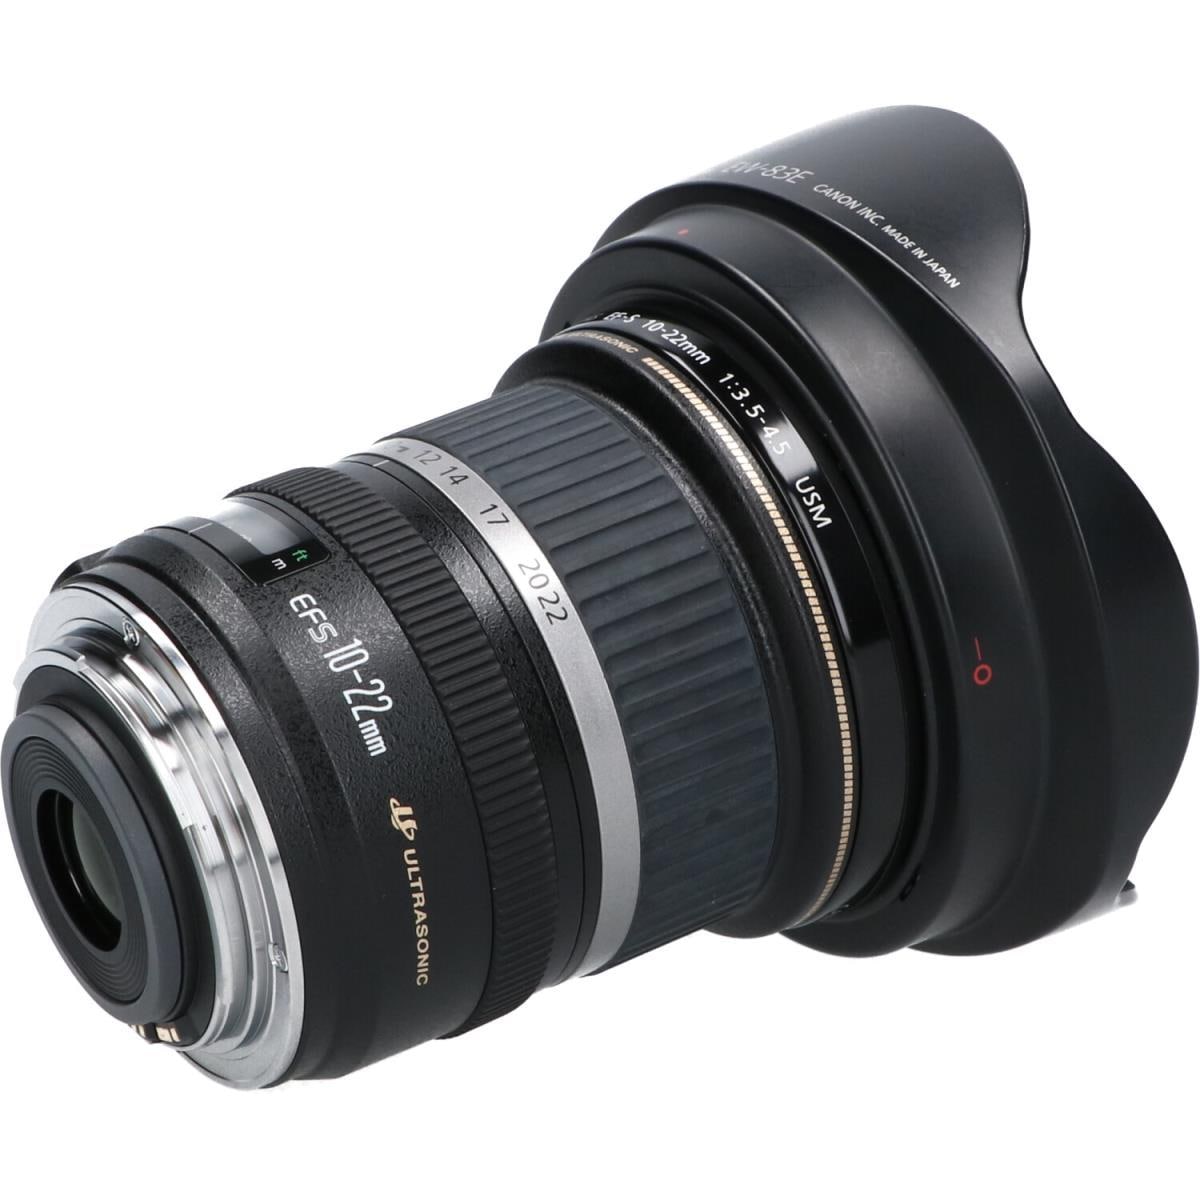 KOMEHYO|CANON EF-S10-22mm F3.5-4.5USM|Canon|Camera|Interchangeable